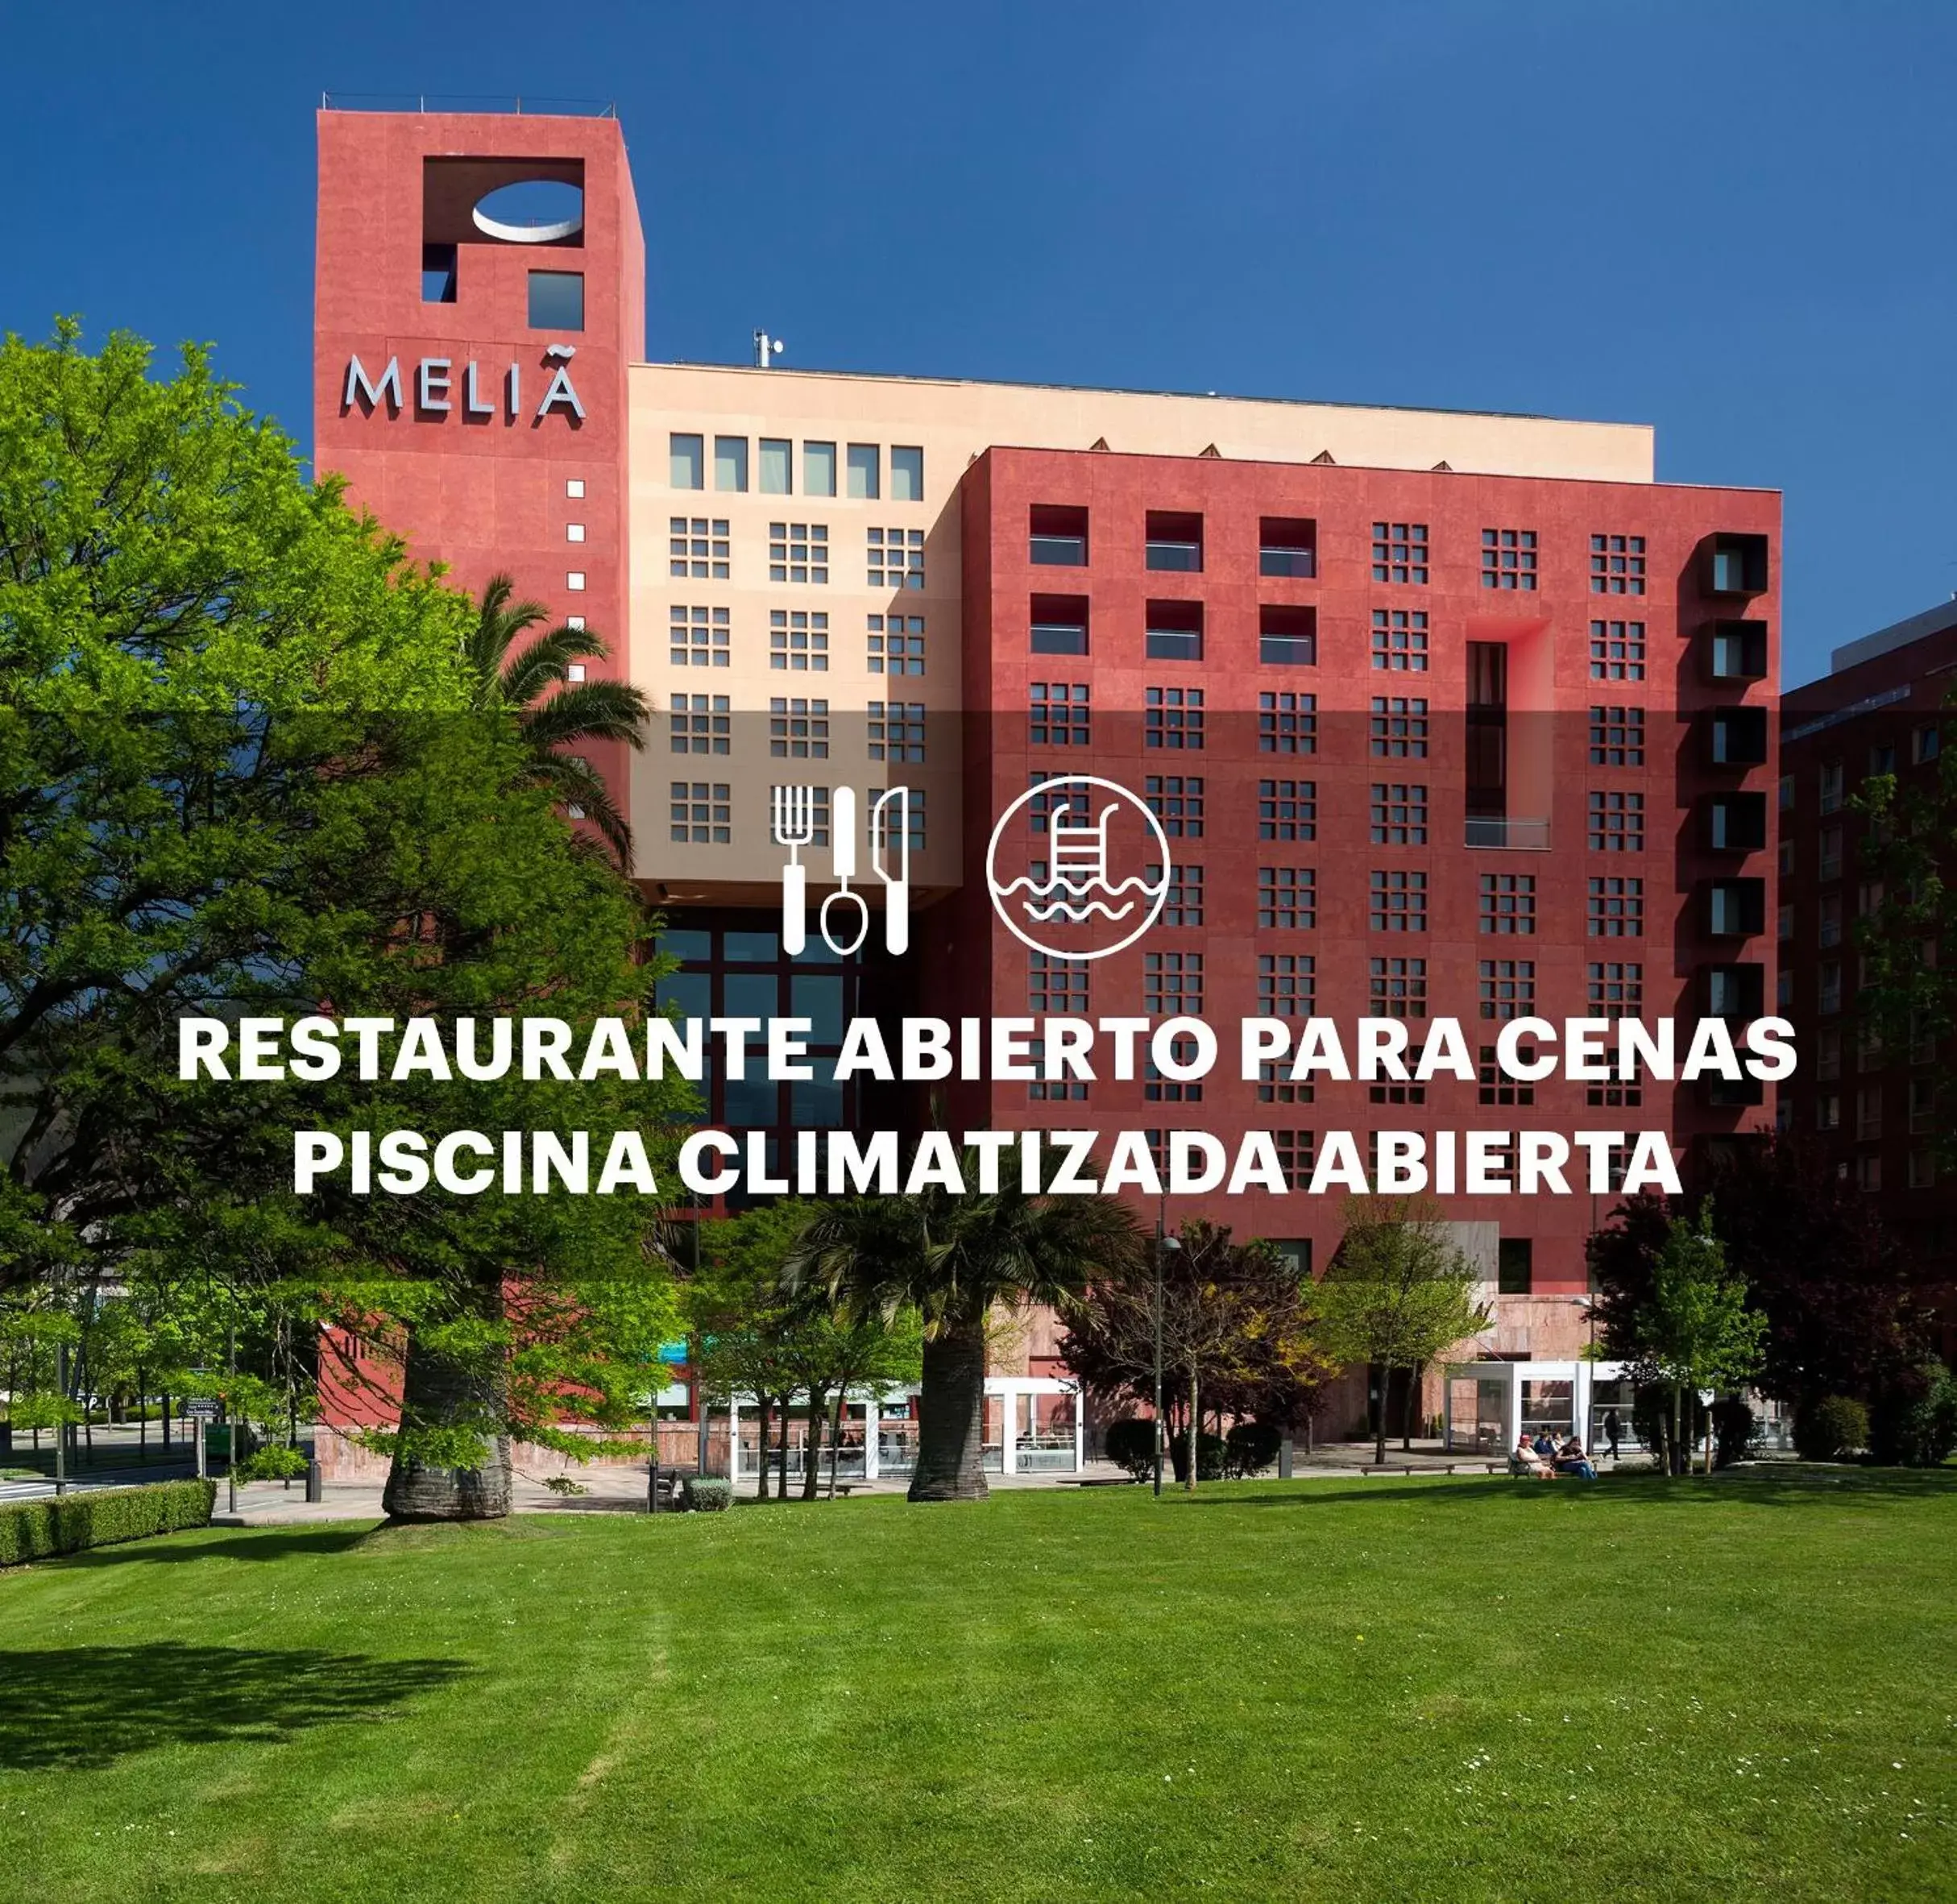 Property building in Hotel Melia Bilbao